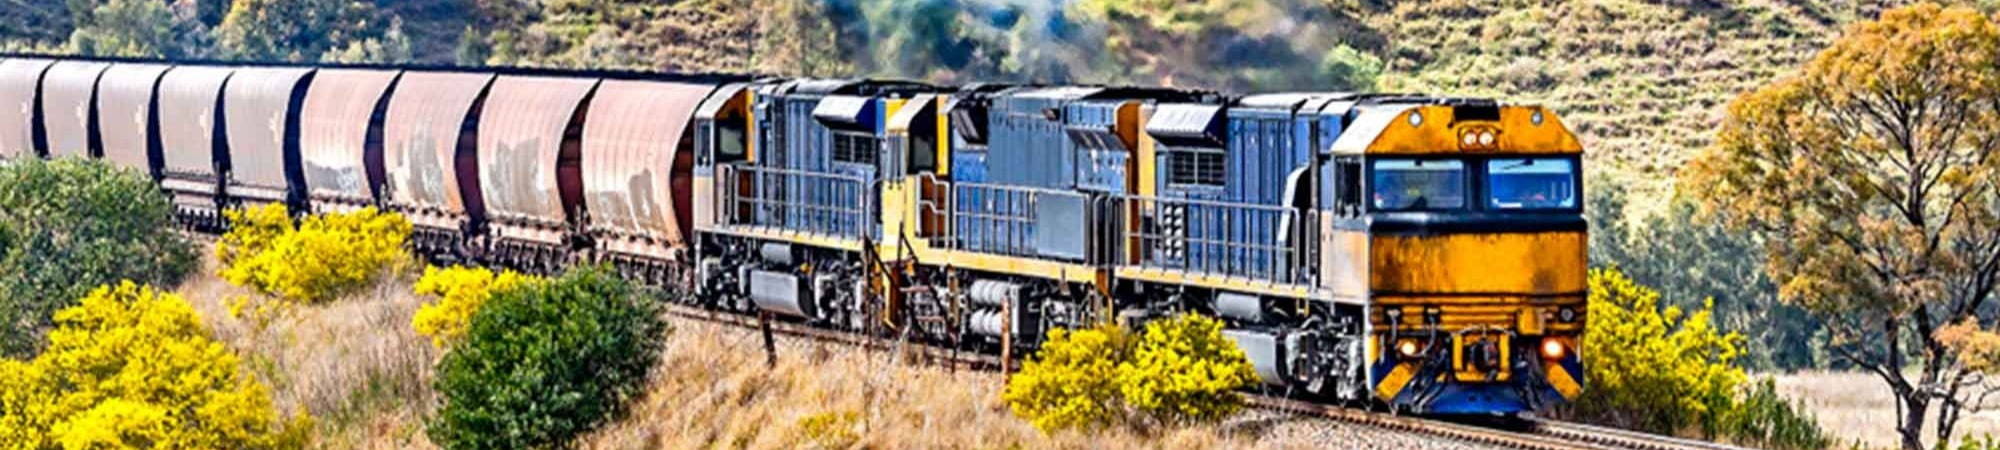 locomotive train in Australian countryside